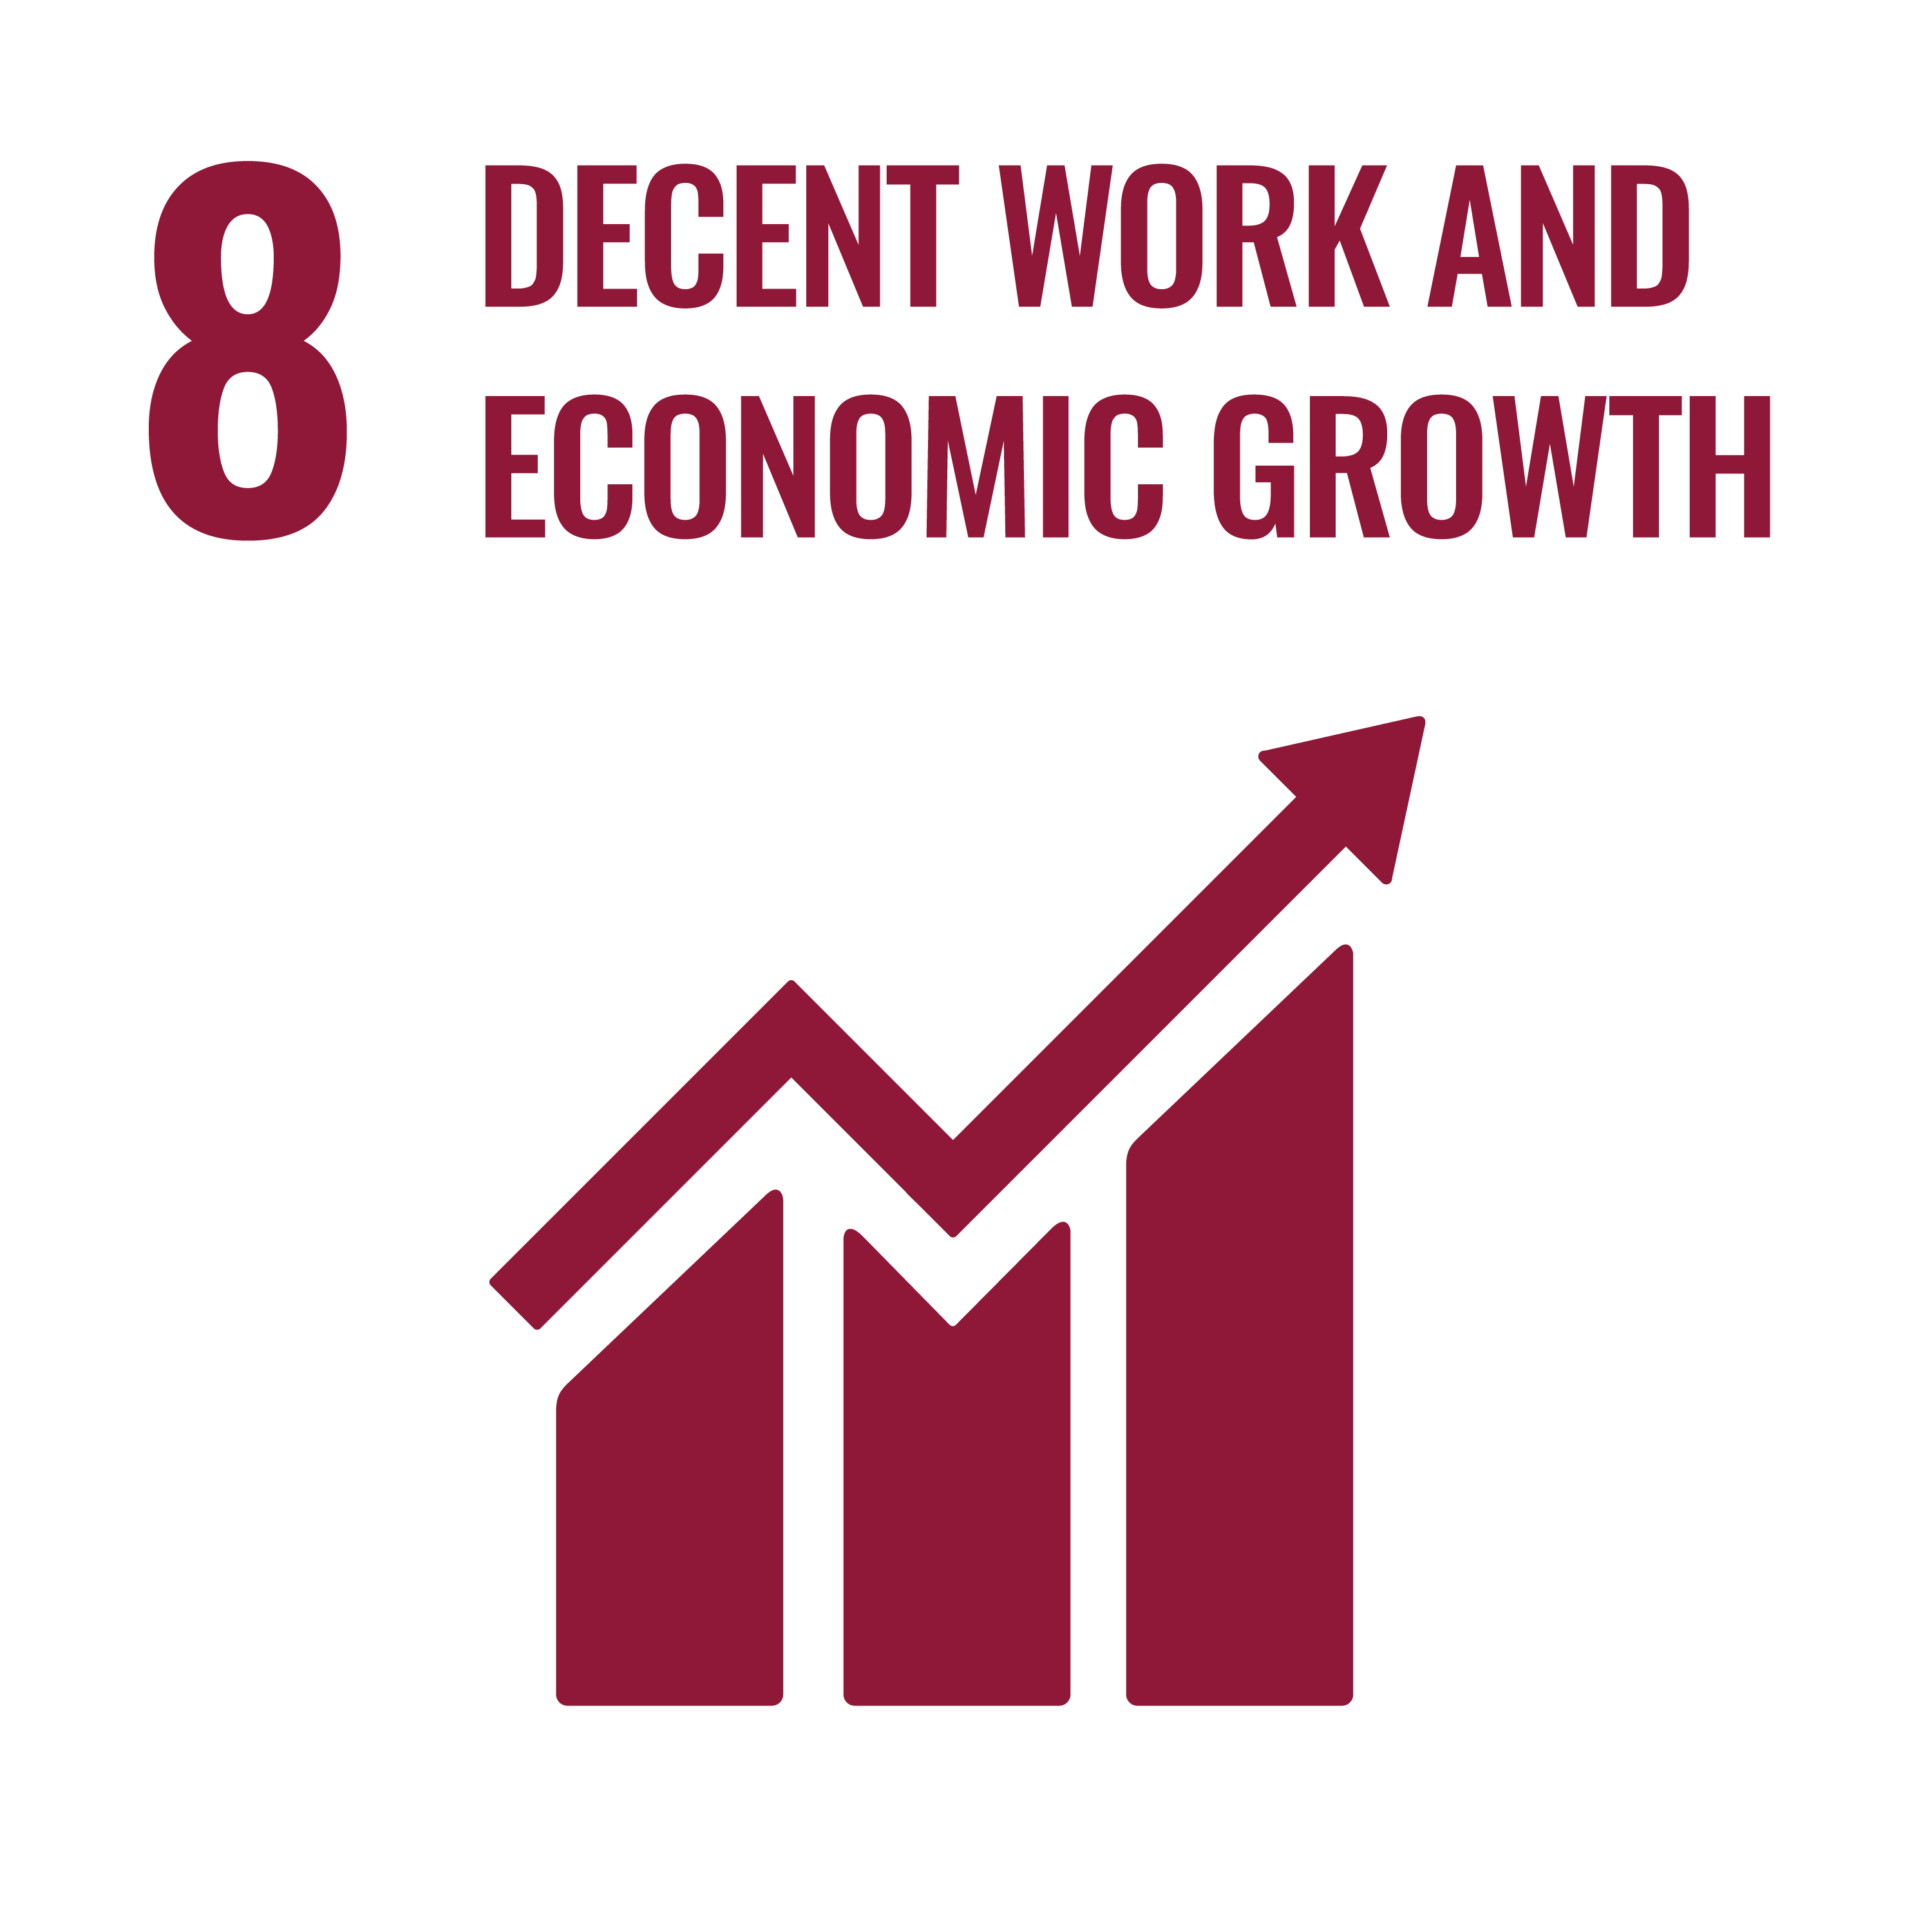 SDG 8: Decent Work and Economic Growth